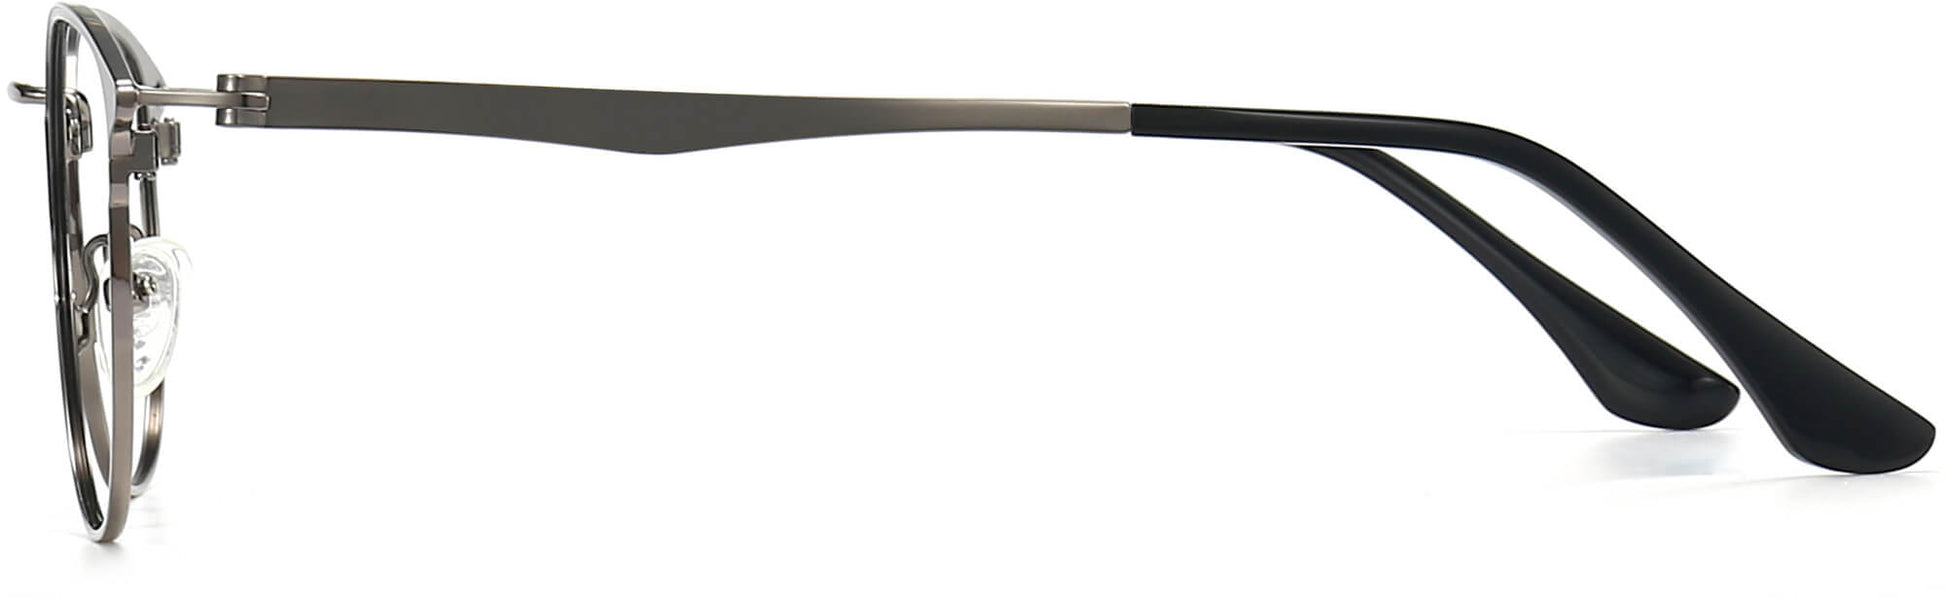 Benson Round Black Eyeglasses from ANRRI, side view